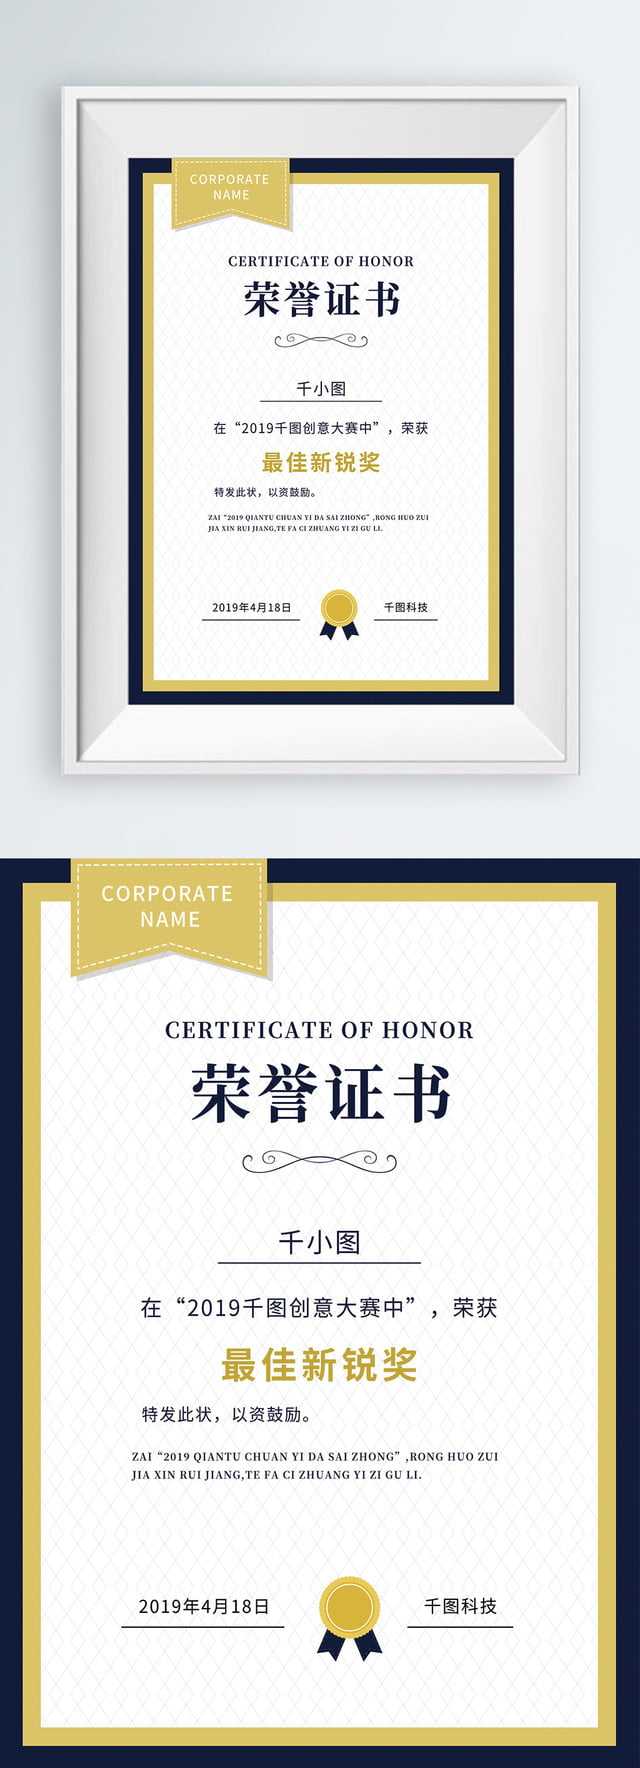 Certificate Authorization Certificate Certificate Of Honor Throughout Certificate Of Authorization Template